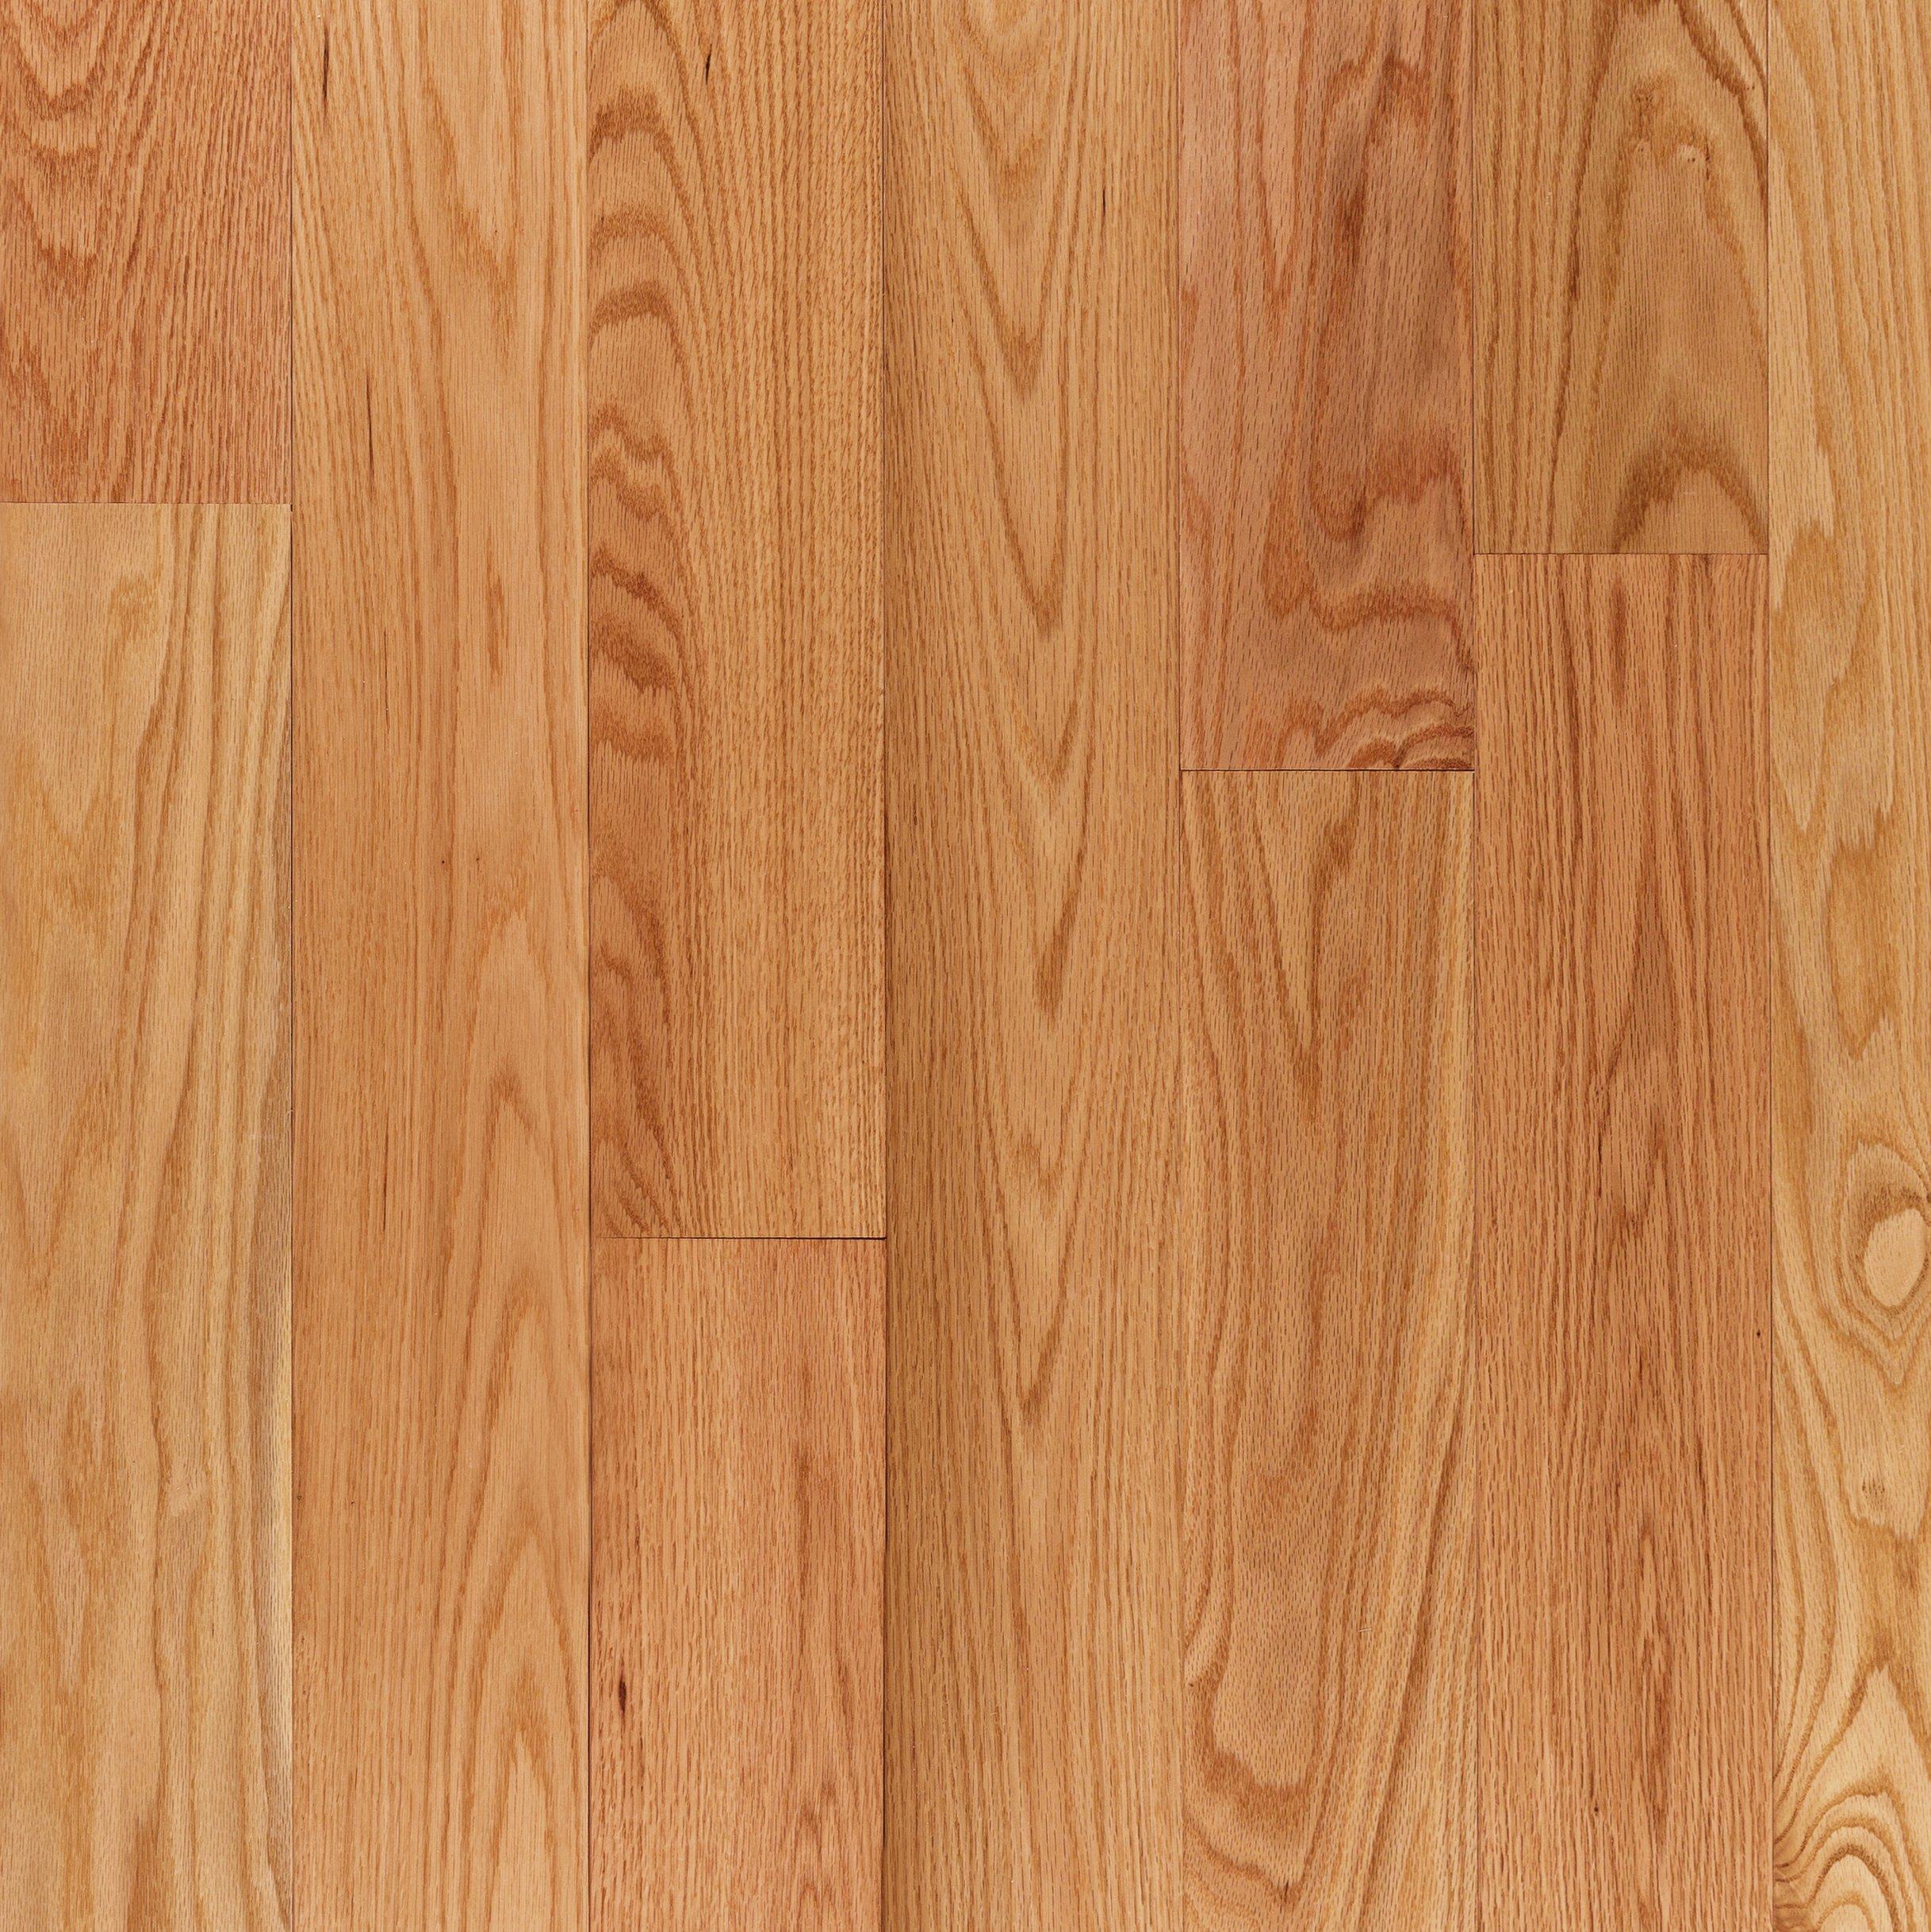 Red Oak Smooth Solid Hardwood Floor, Bruce Red Oak Hardwood Flooring